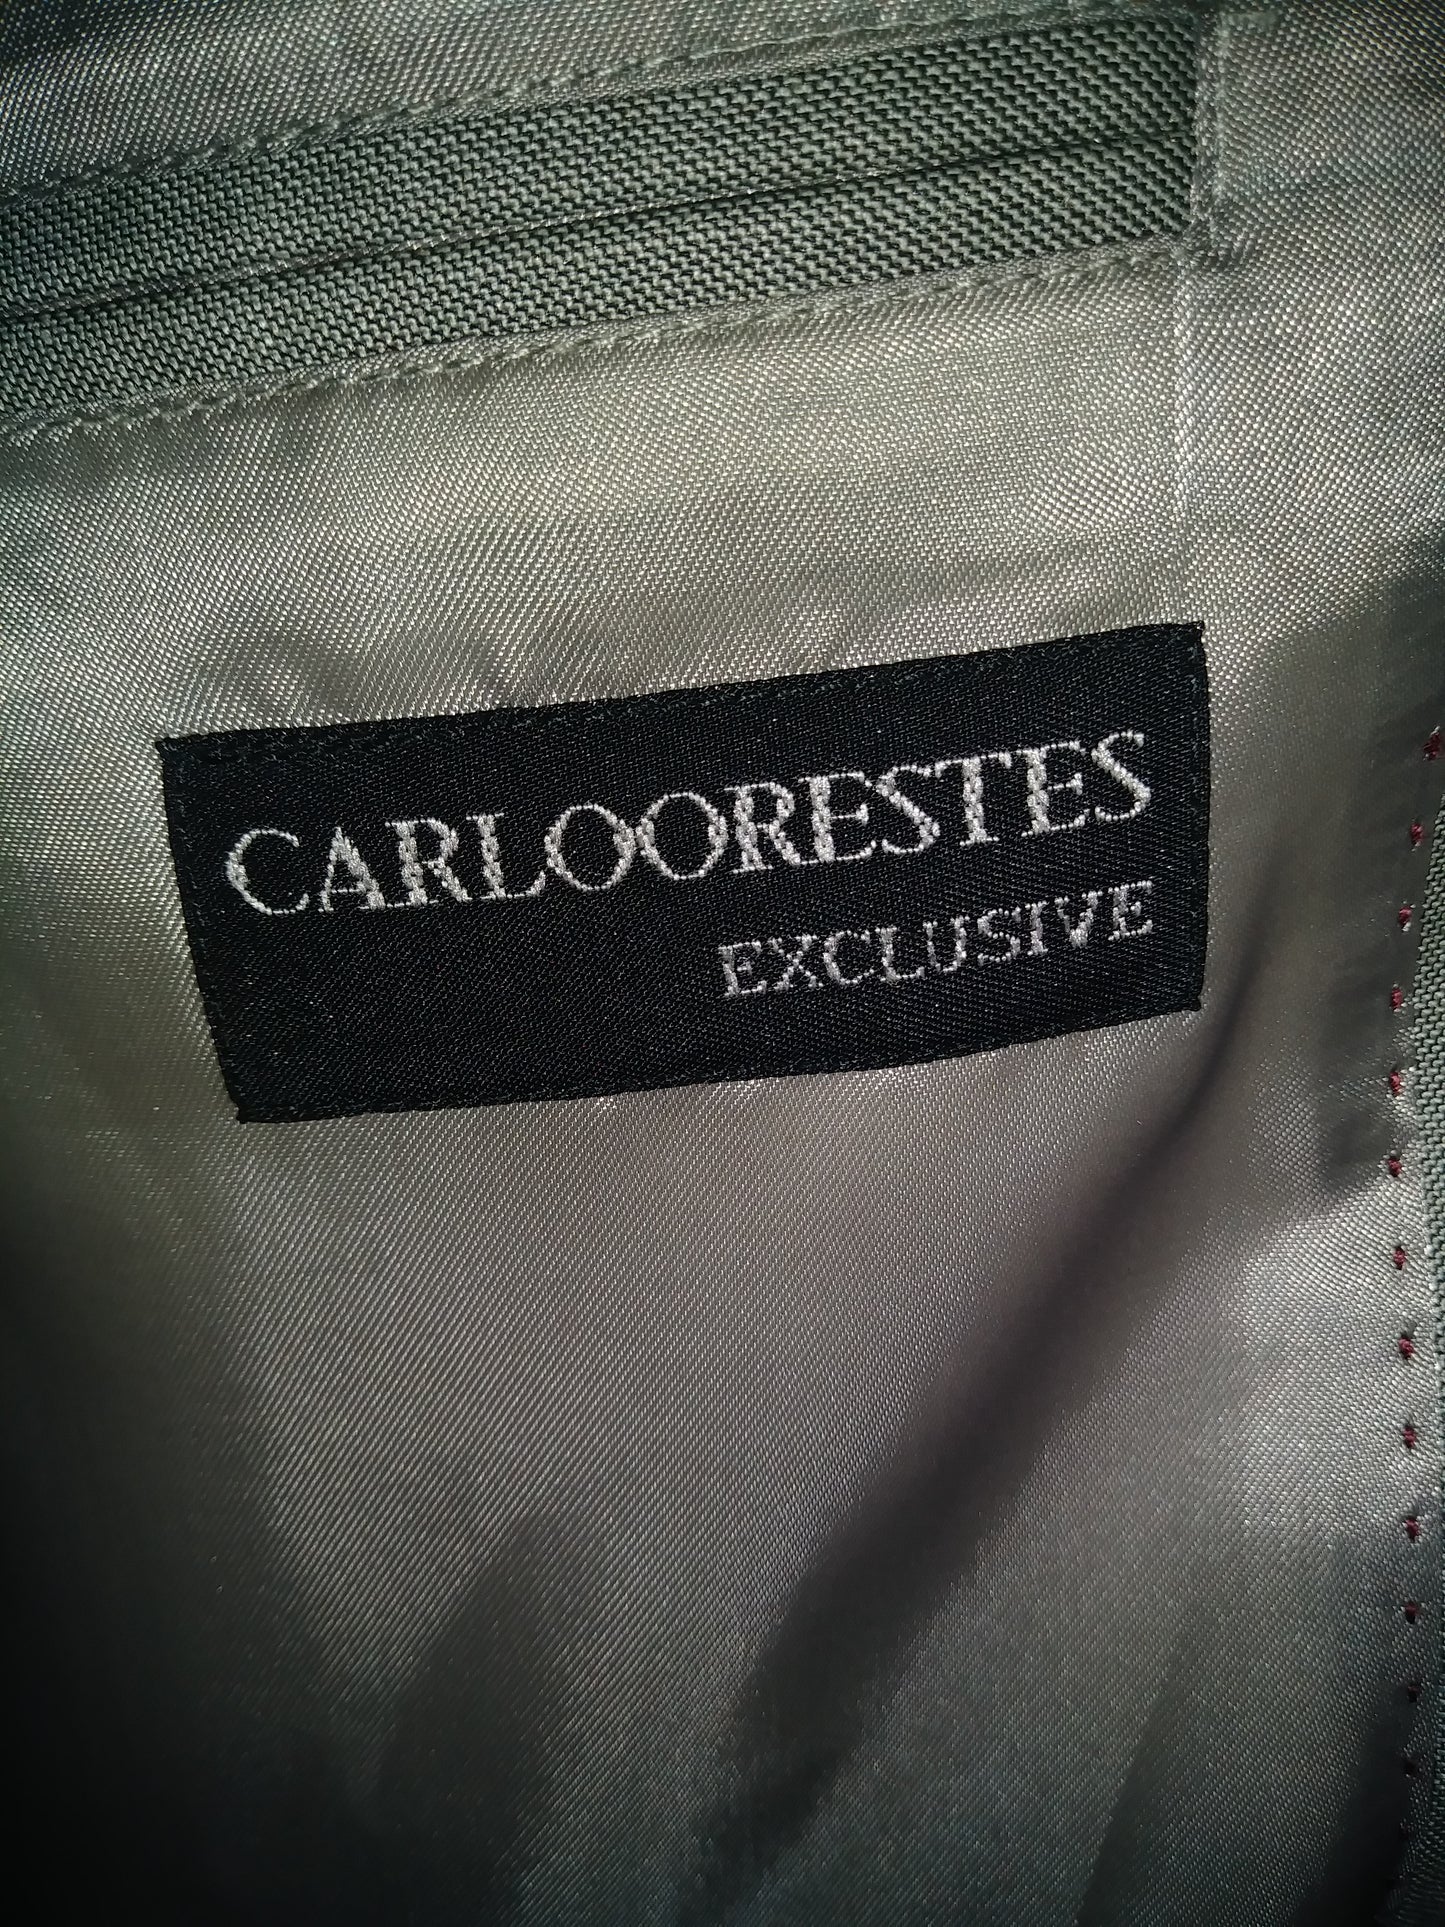 Carloorestes Men's Suit Light Green  SKU 000225-1